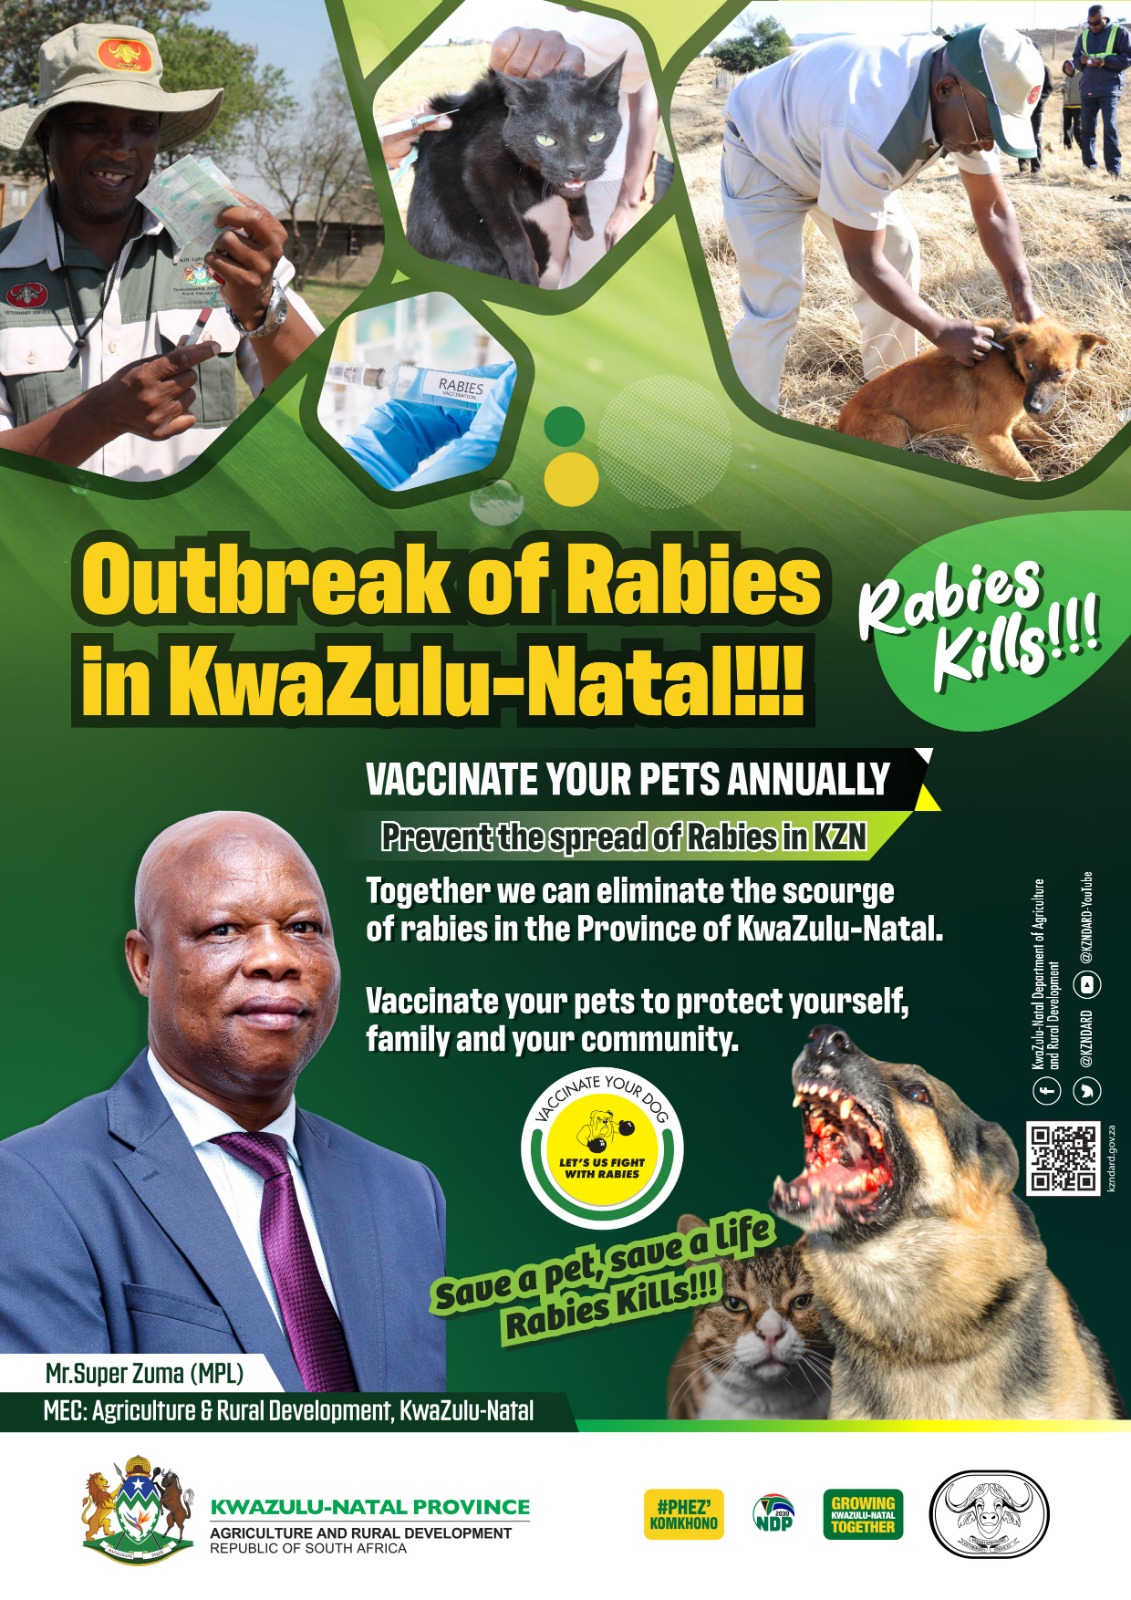 Rabies outbreak in KZN